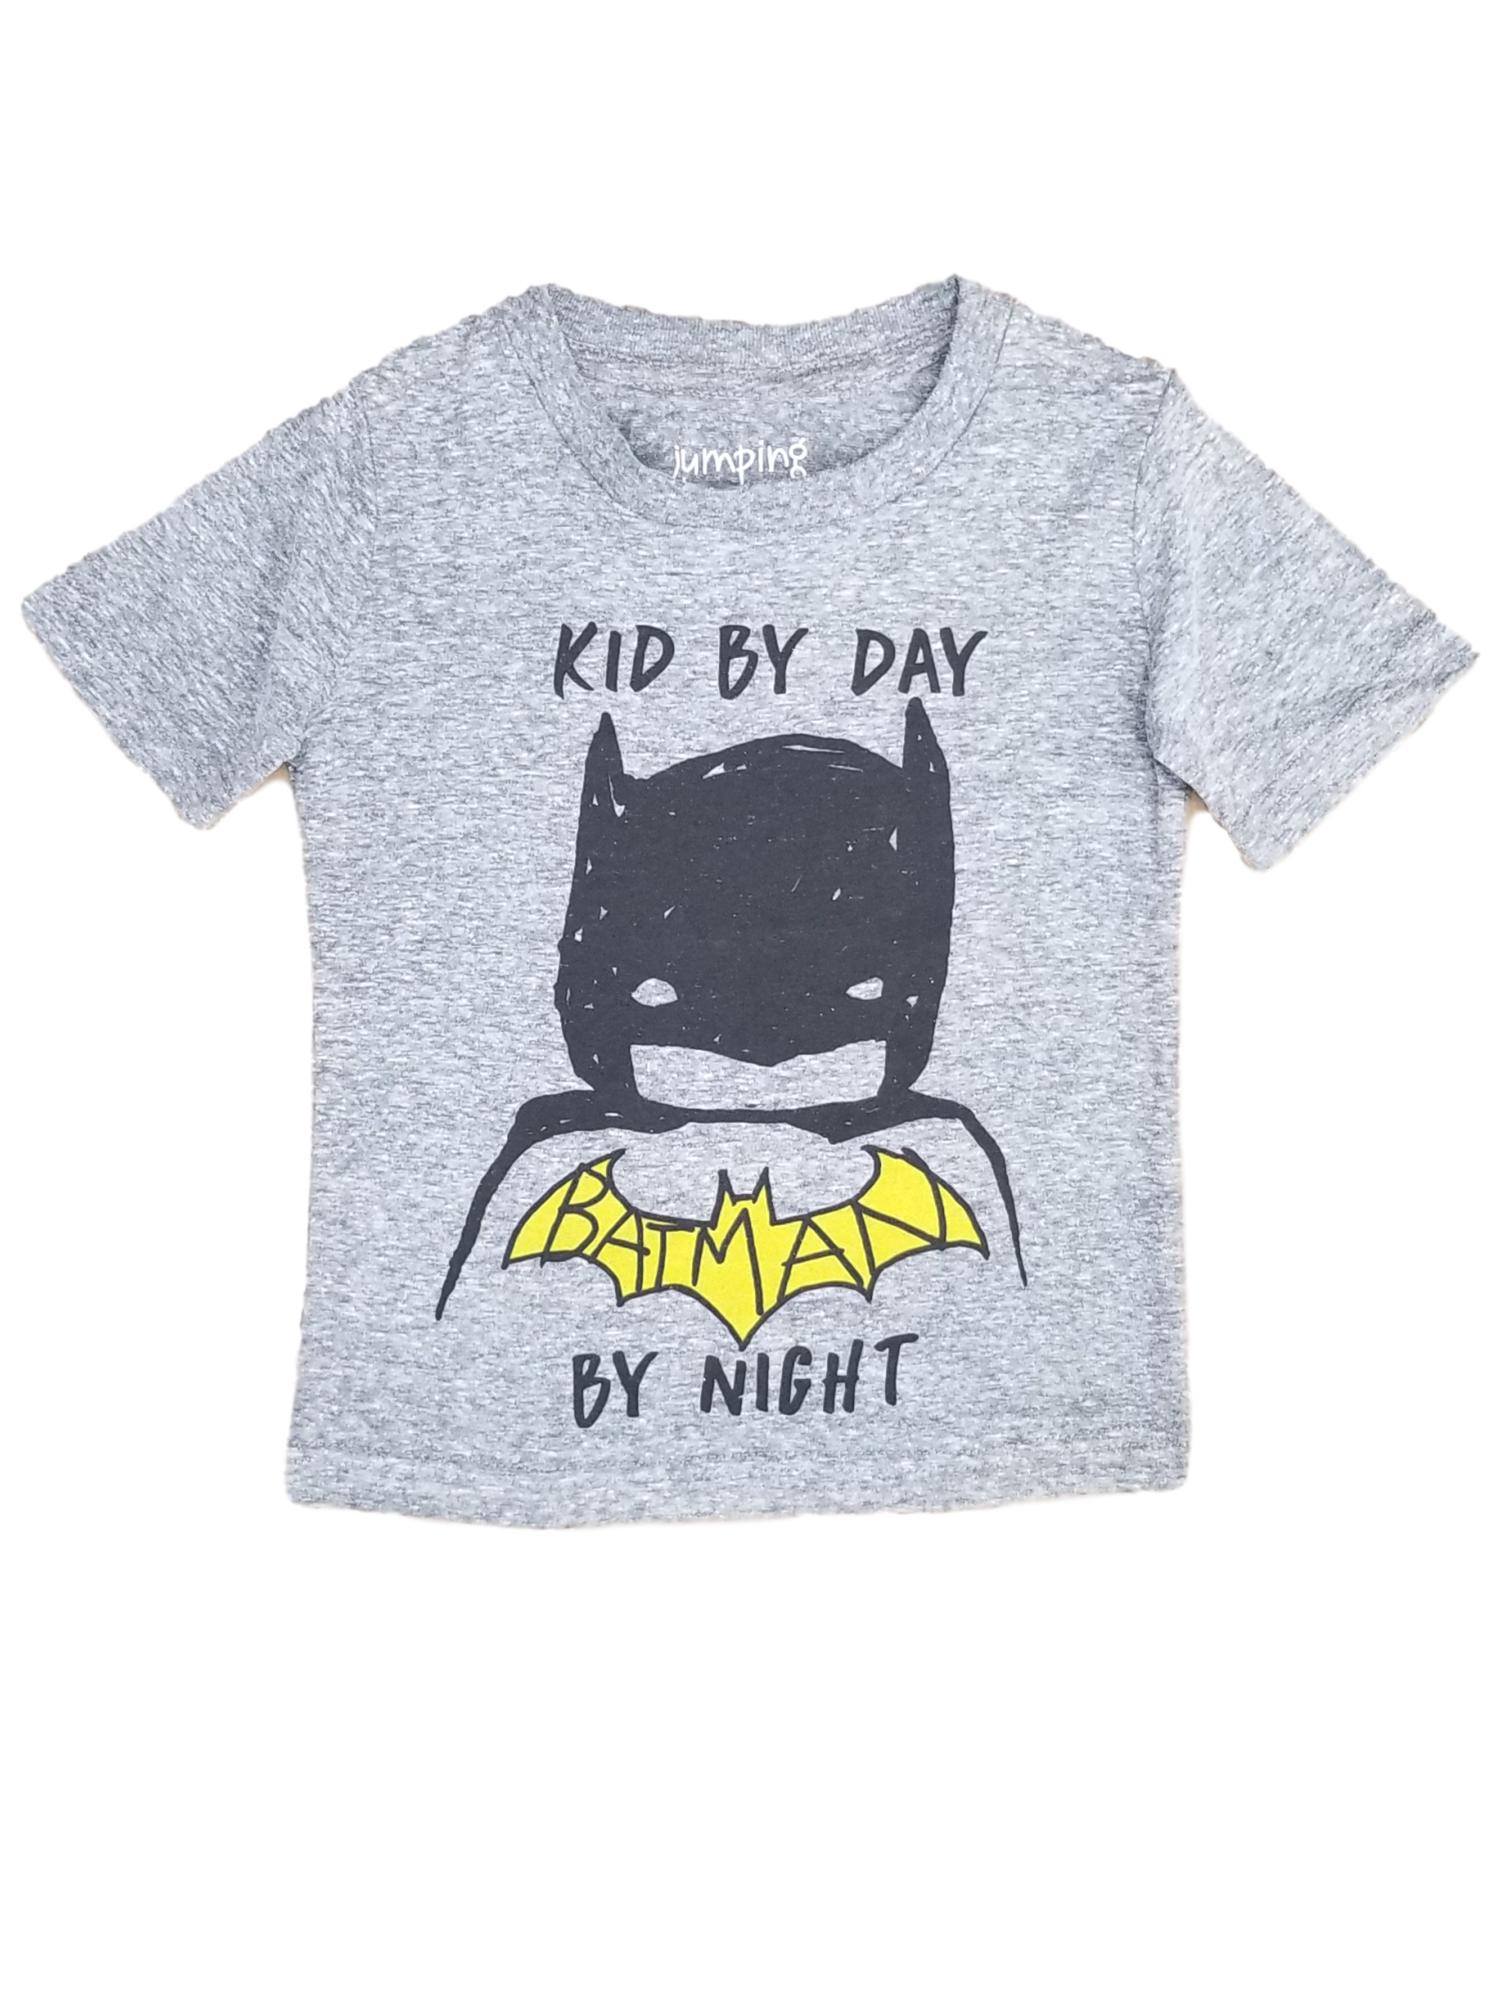 Jumping Beans Toddler Boys Gray Kids By Day Batman By Night T-Shirt Superhero Tee Shirt